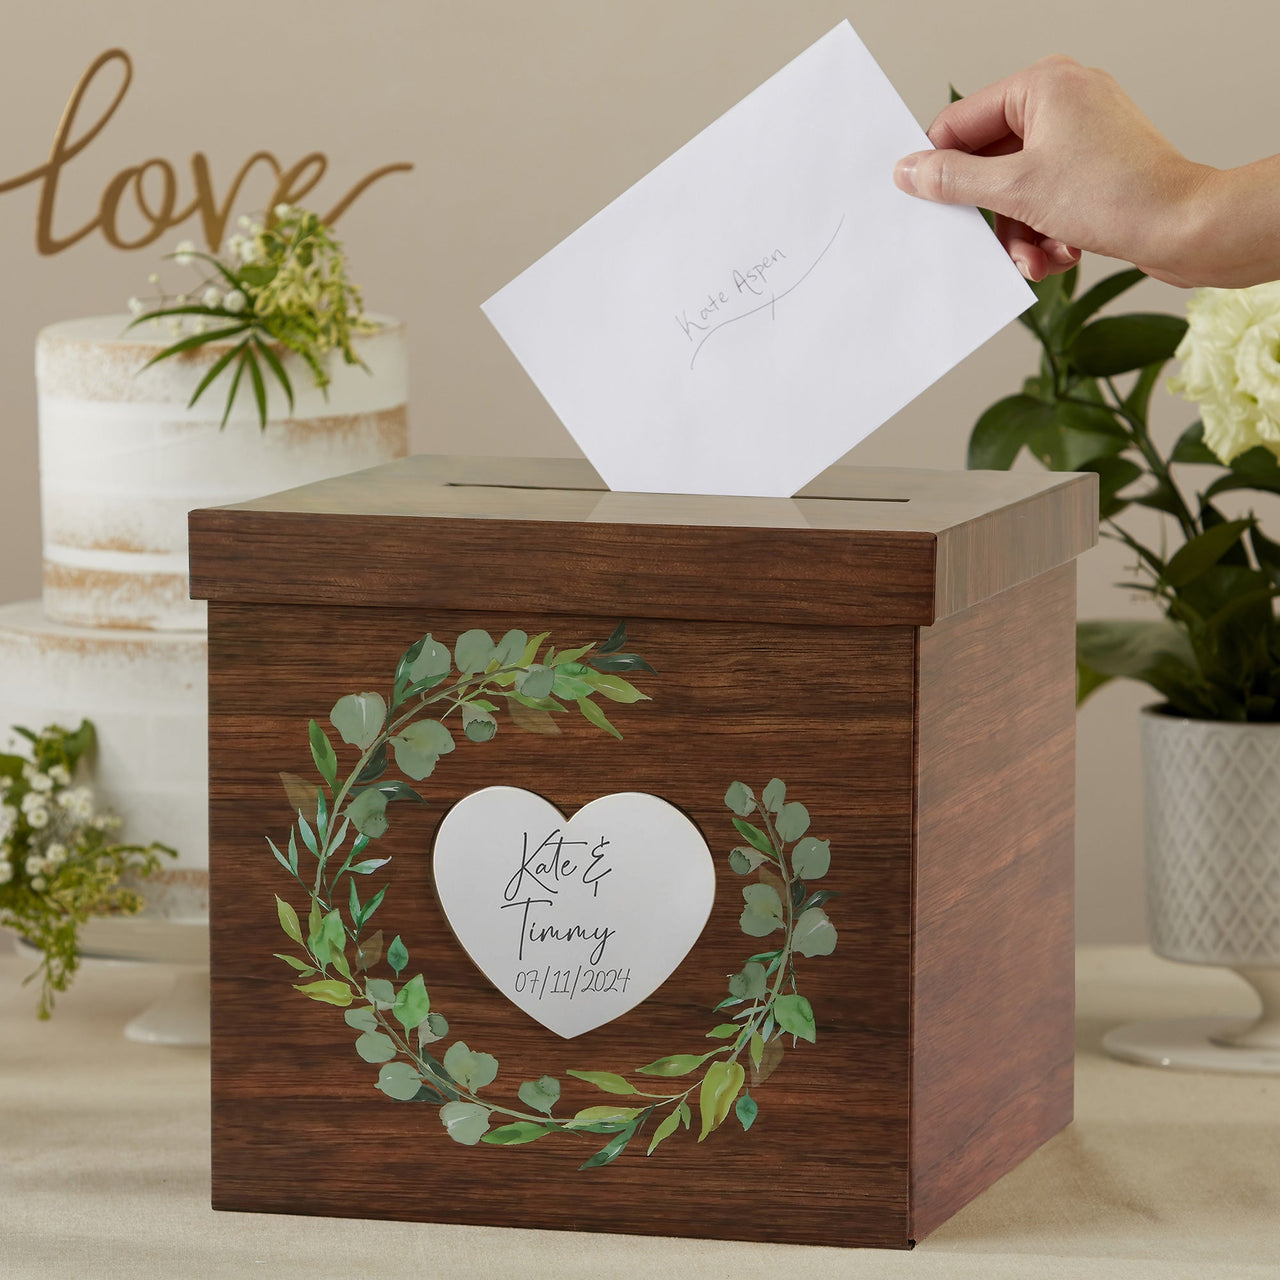 Rustic Brown Wood Card Box - Updated Alternate Image 2 - My Wedding Favors